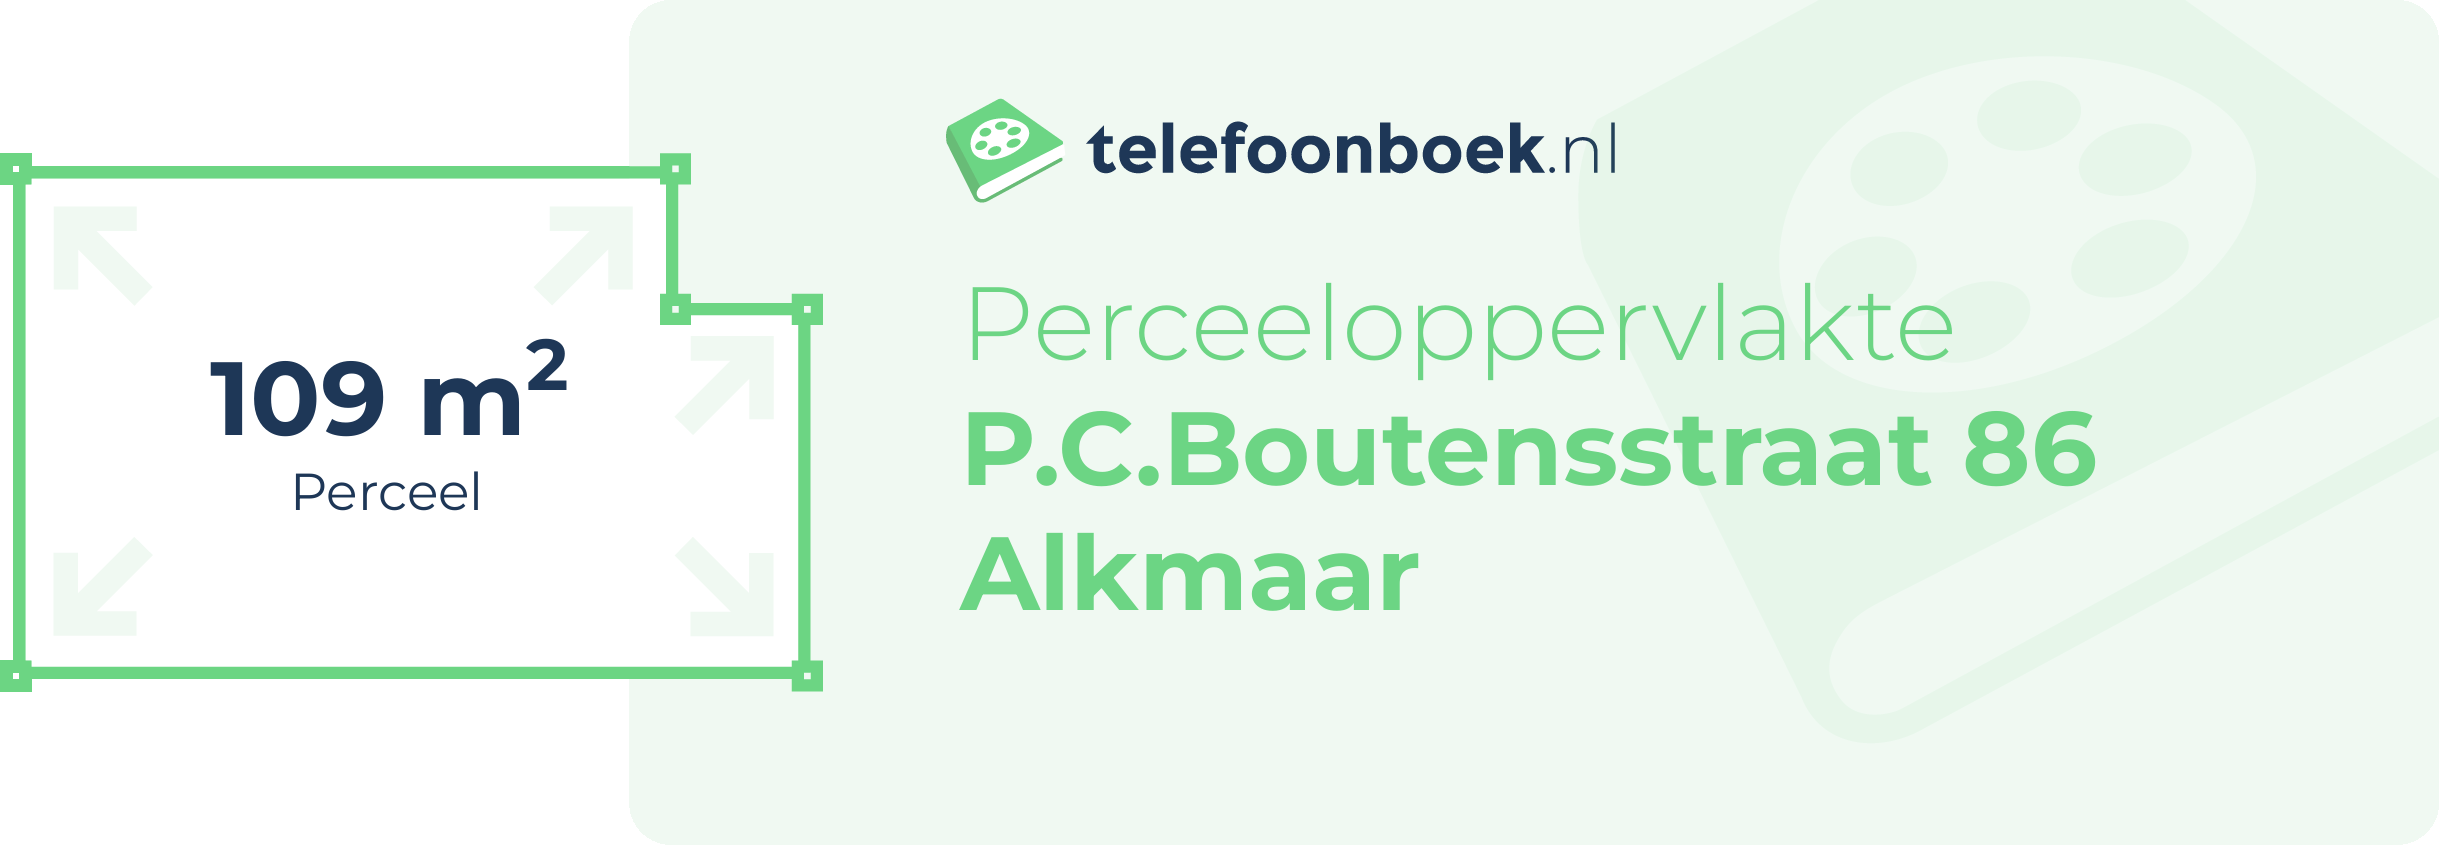 Perceeloppervlakte P.C.Boutensstraat 86 Alkmaar